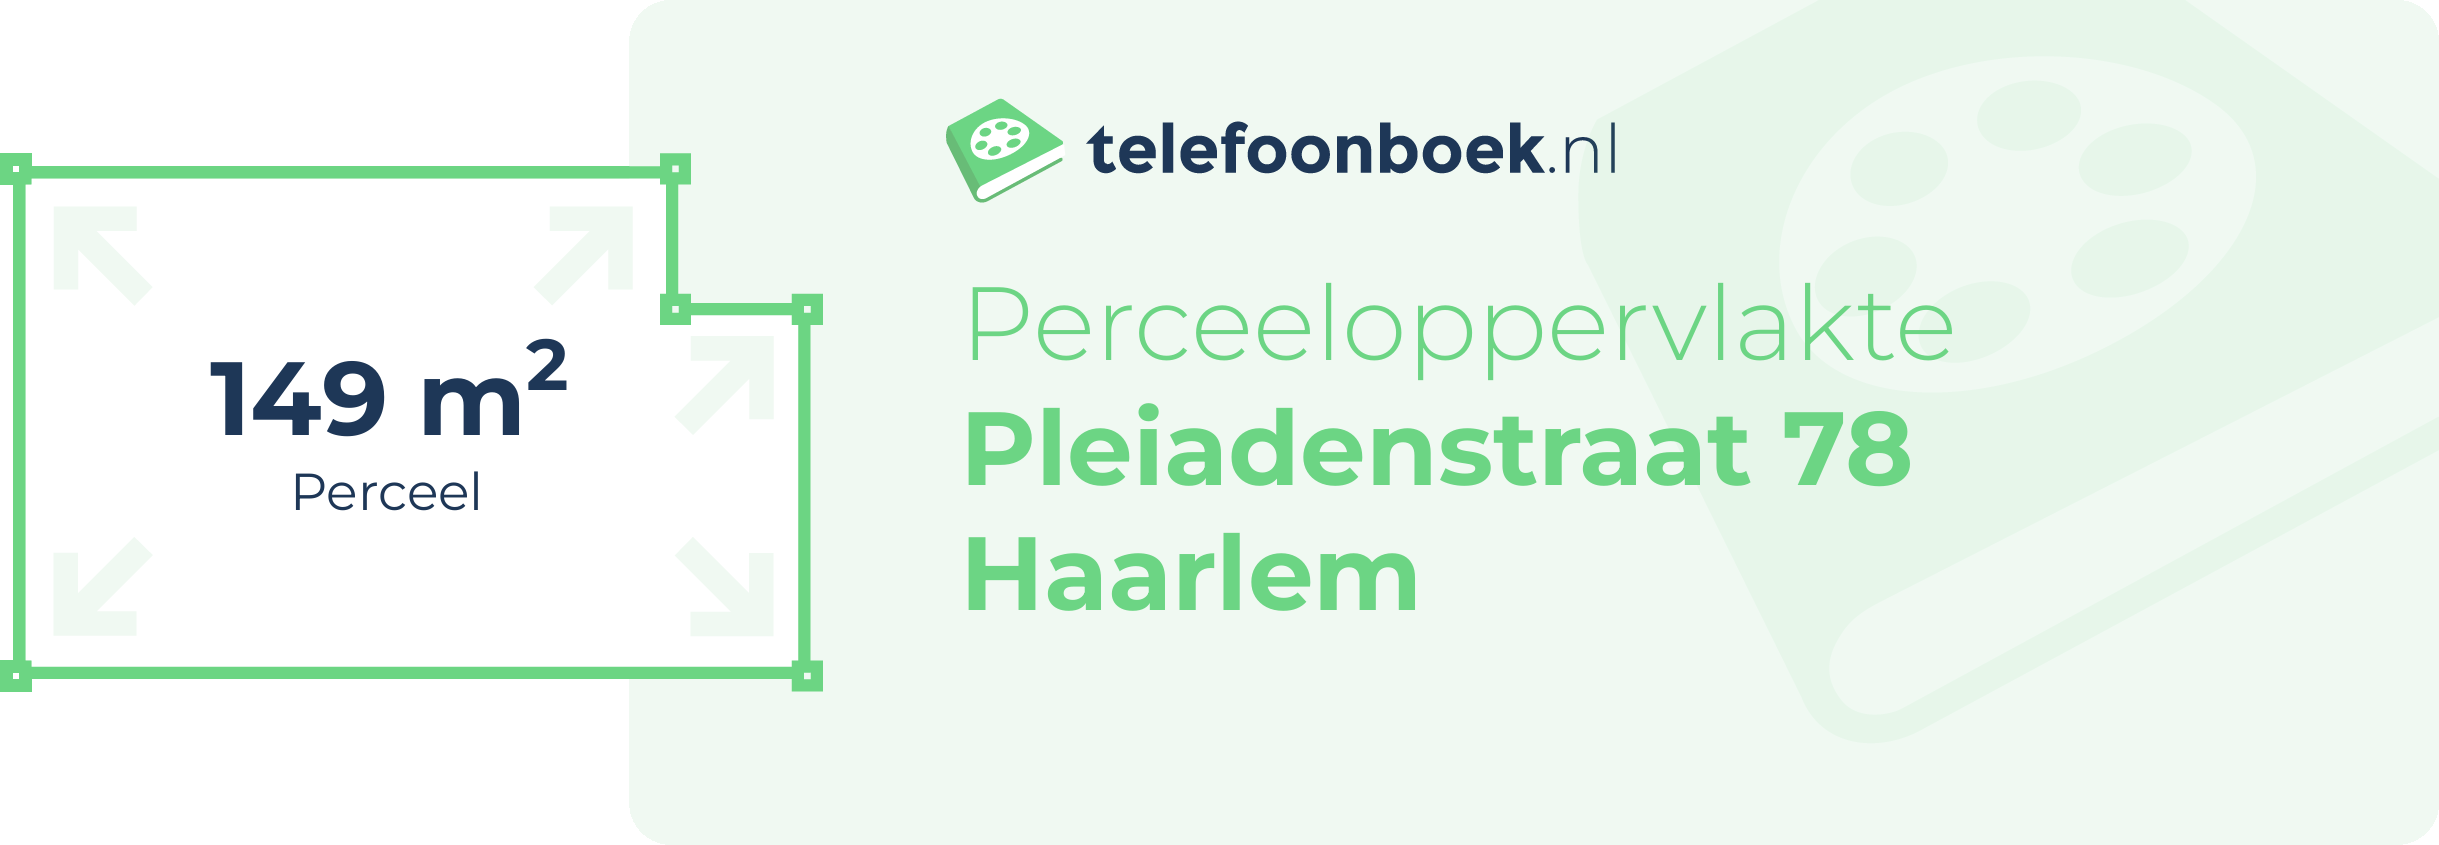 Perceeloppervlakte Pleiadenstraat 78 Haarlem